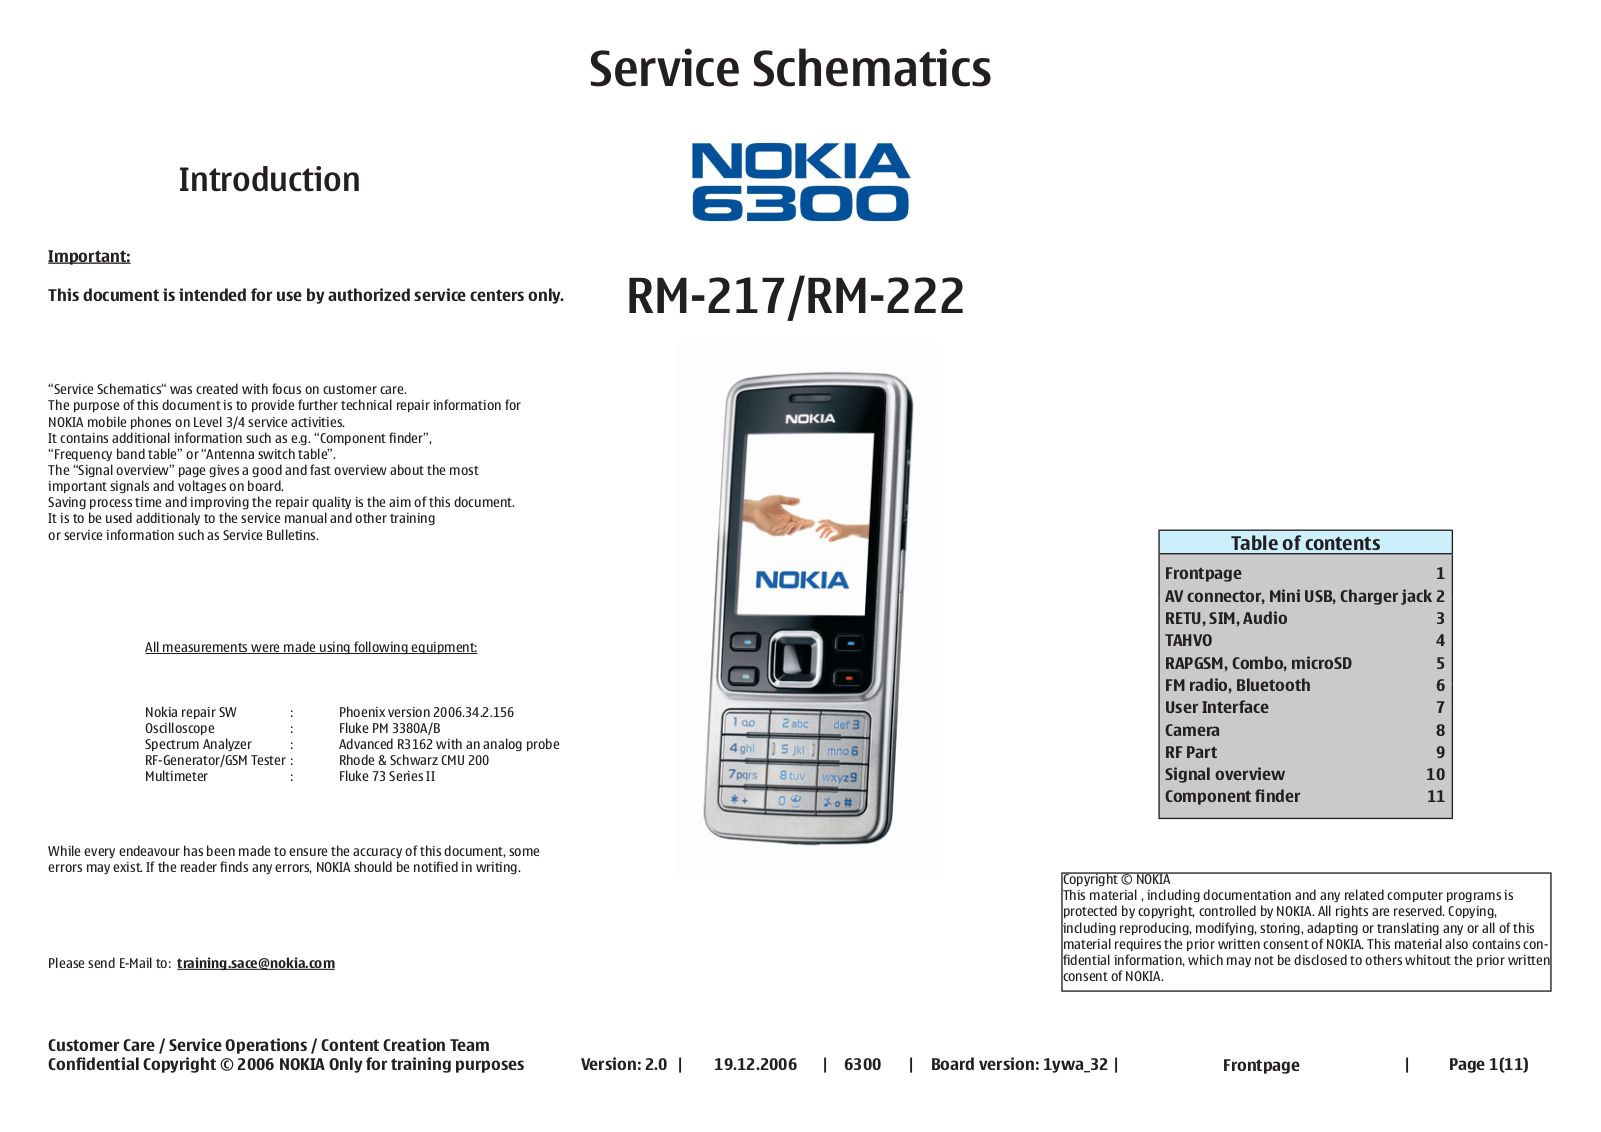 Nokia 6300 RM-217, 6300b RM-222 Schematic